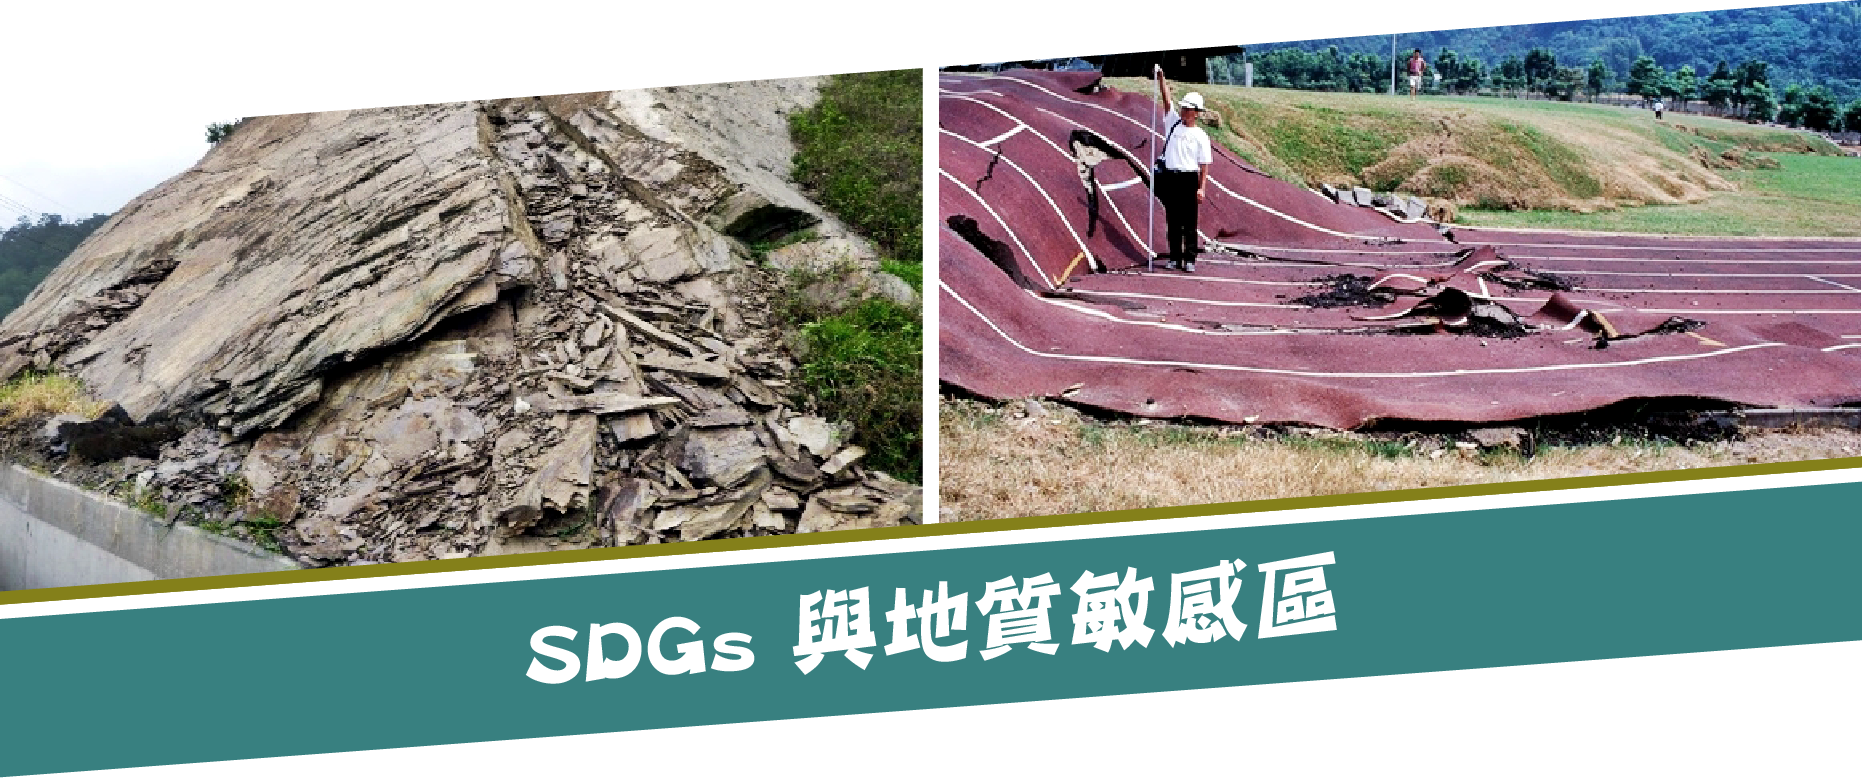 SDGs11 與地質敏感區 Geologically Sensitive Area On SDGs 11